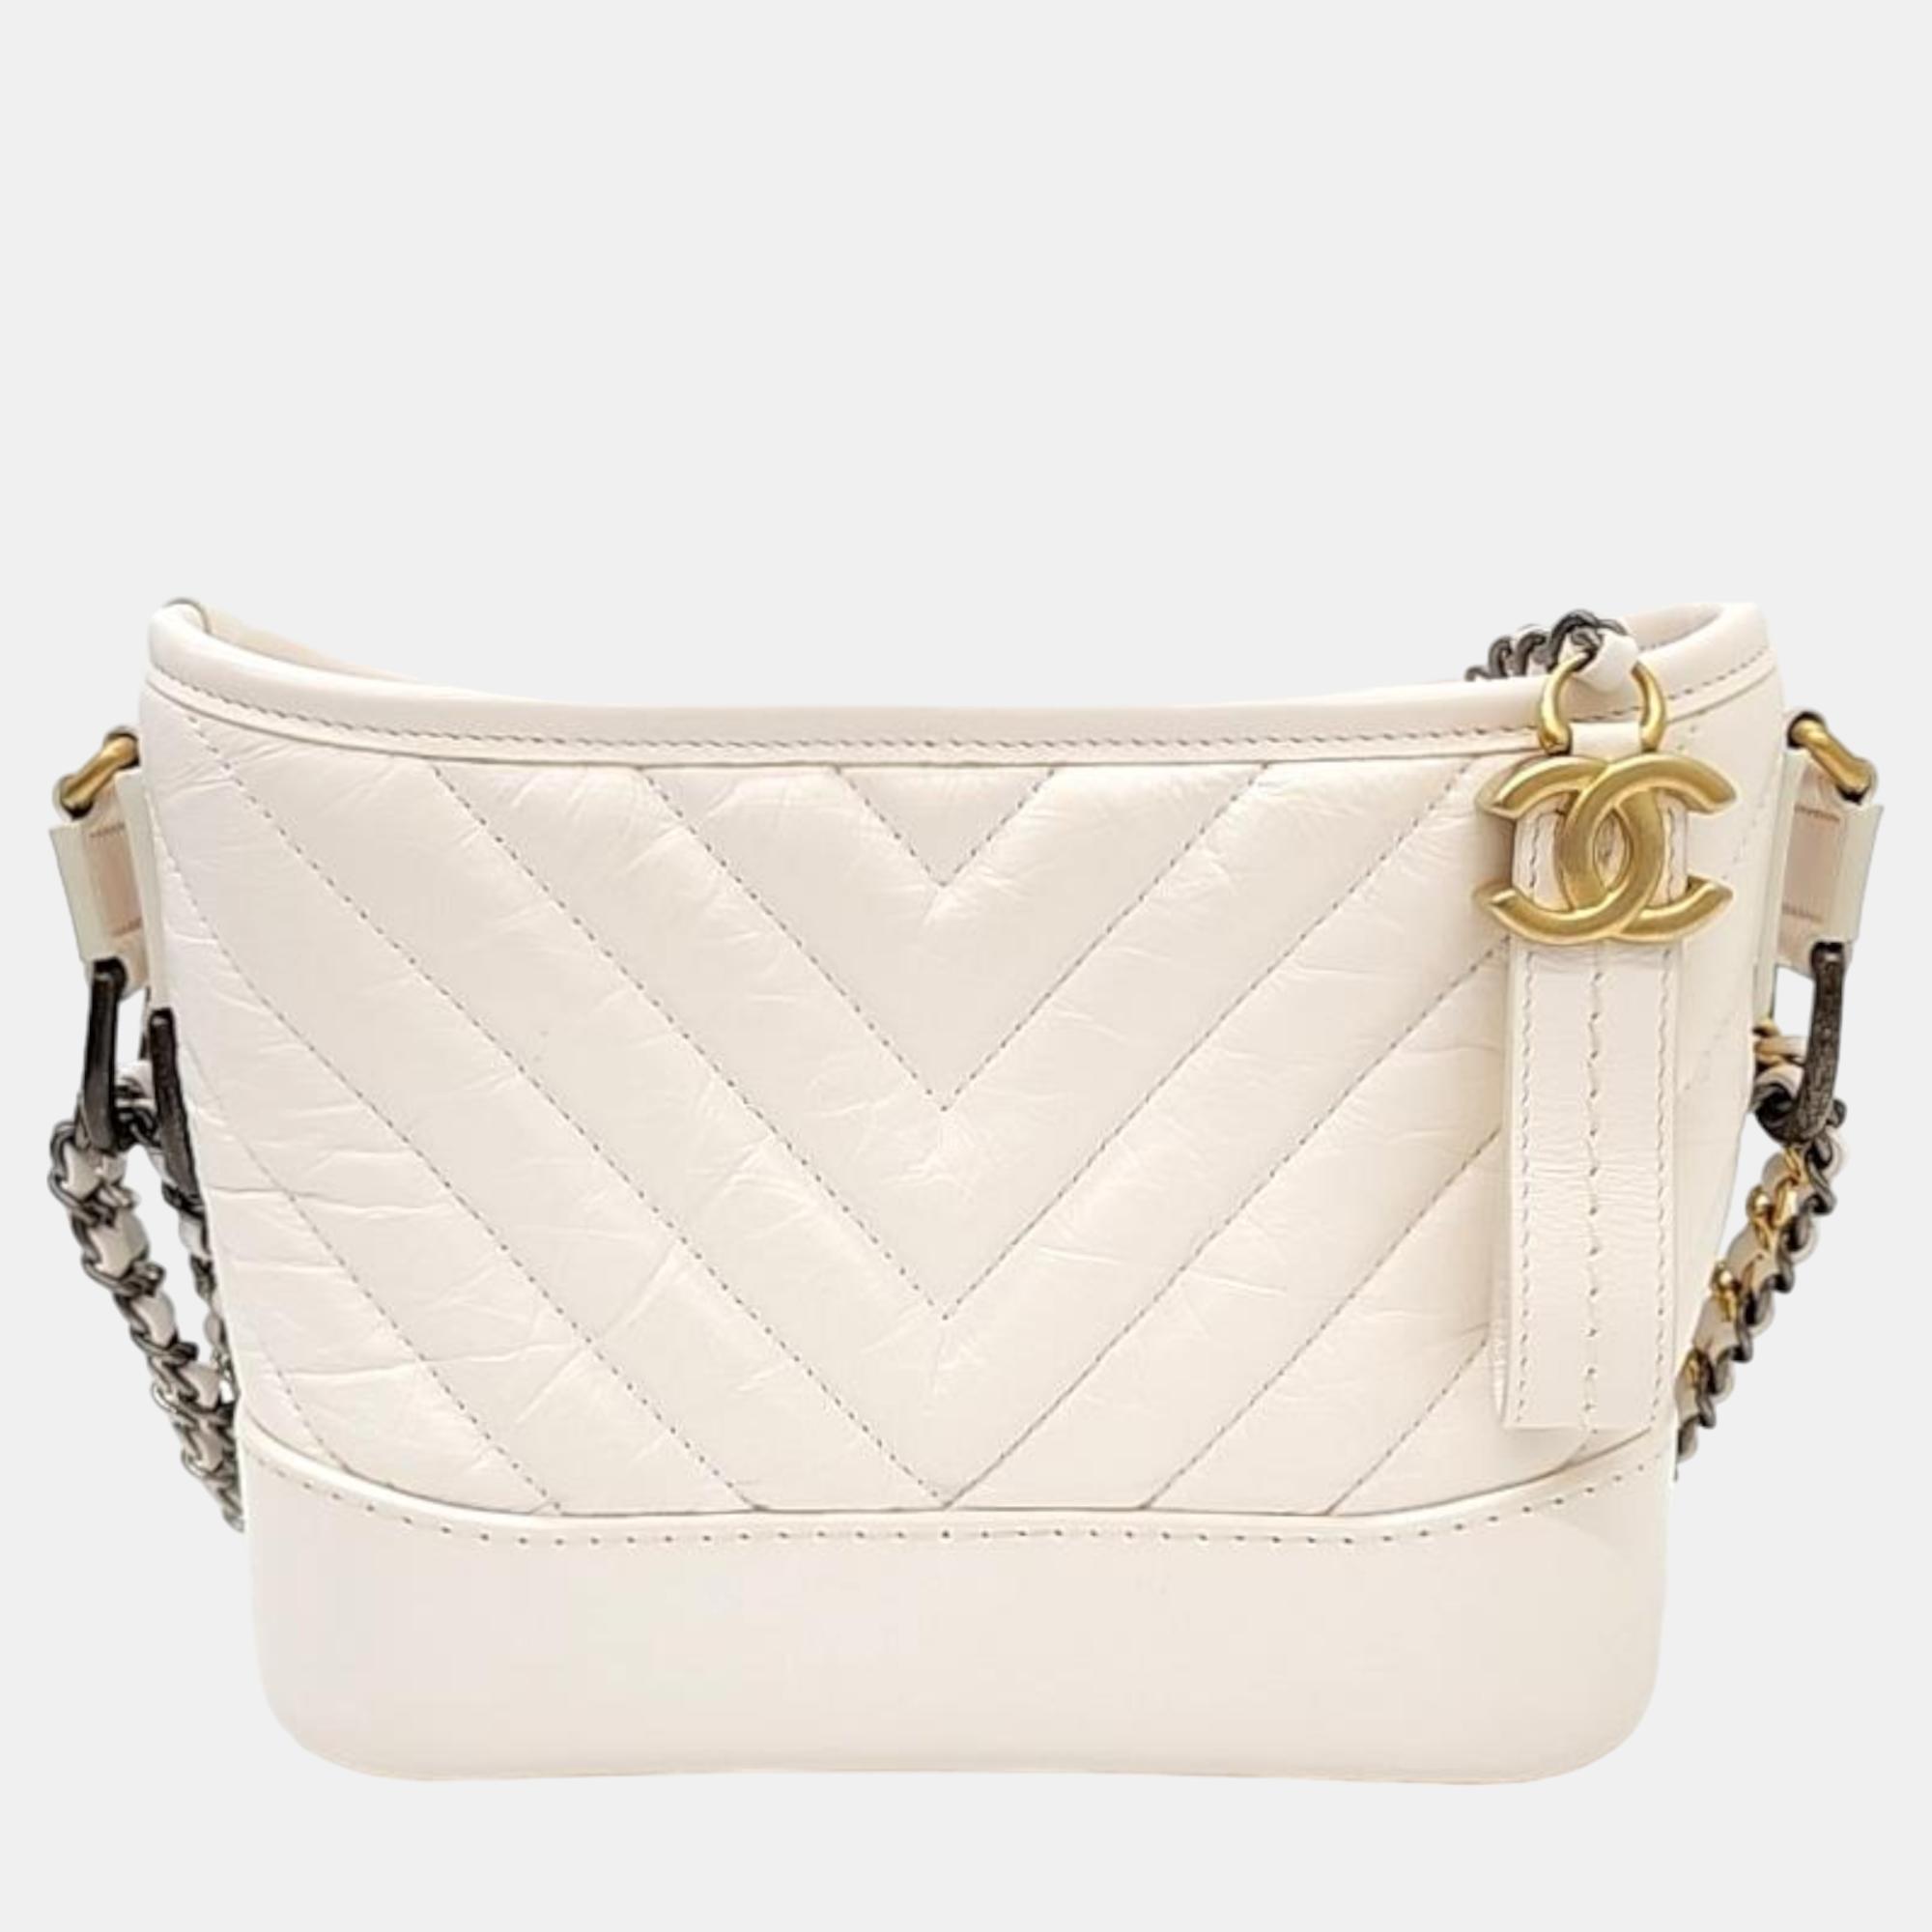 Chanel white leather chevron gabrielle small hobo bag